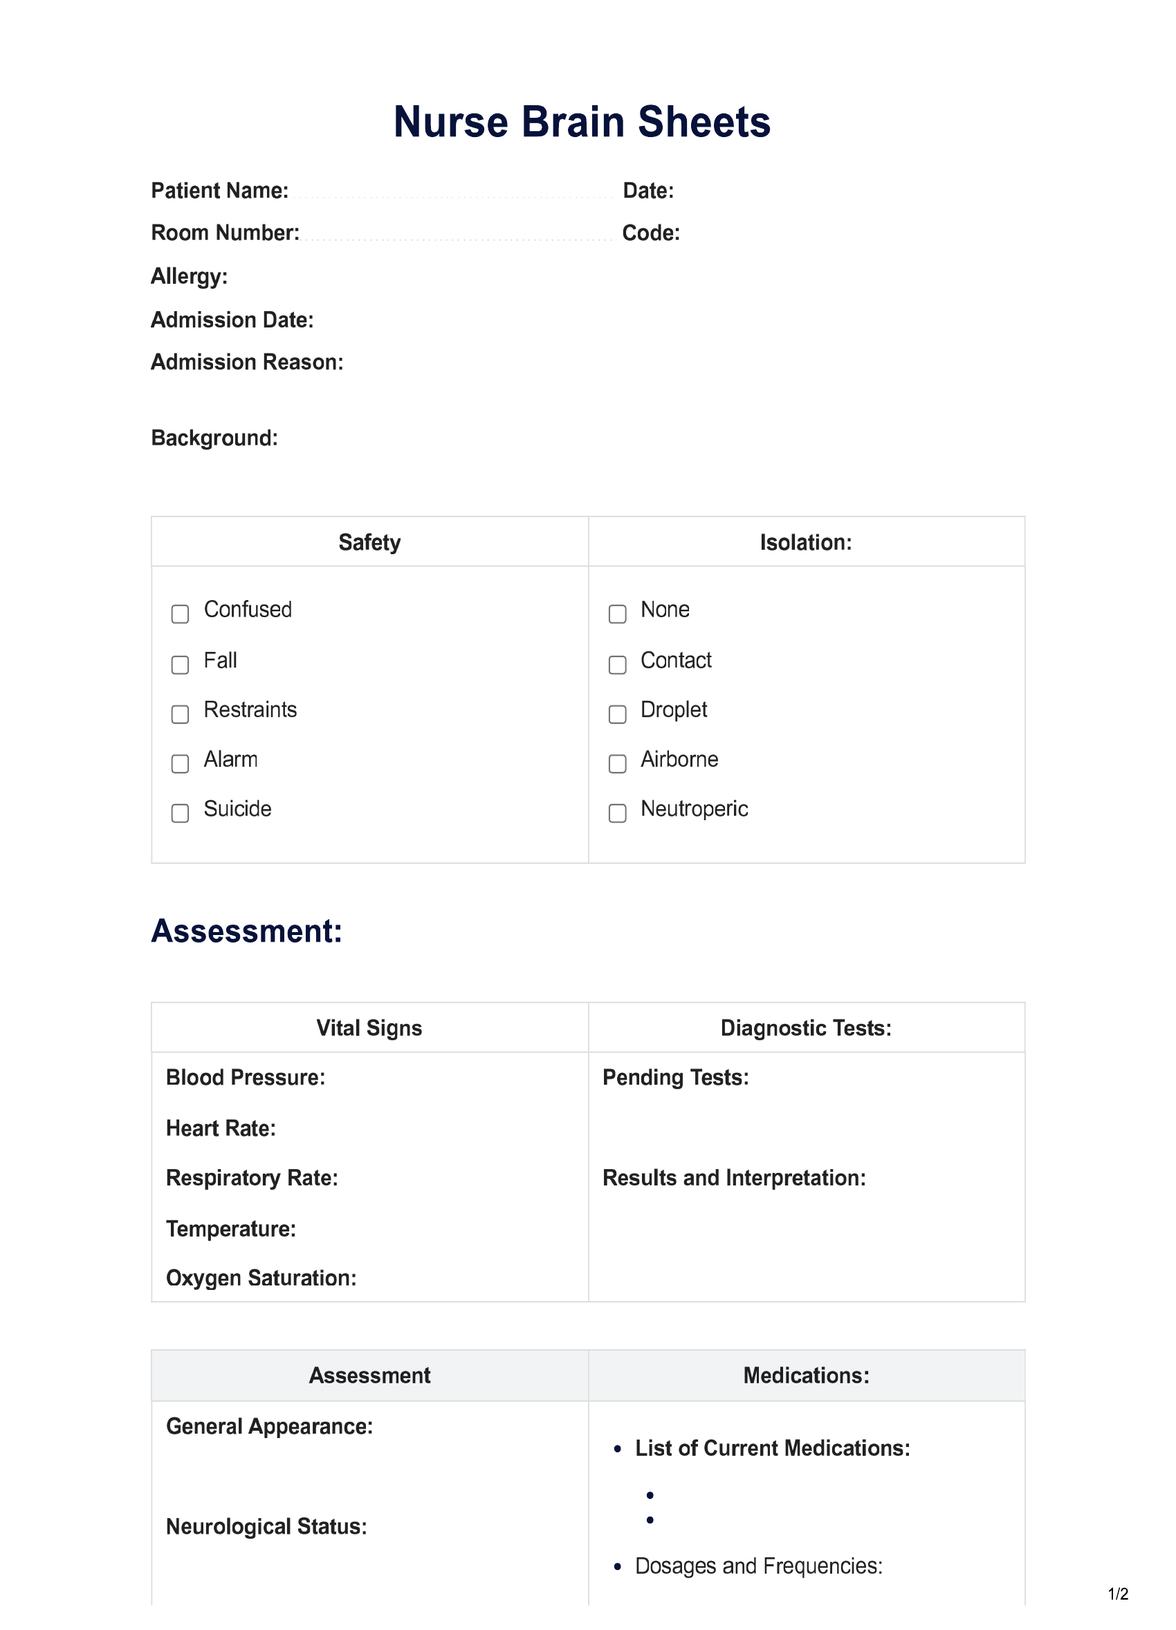 Nurse Brain Sheet PDF Example